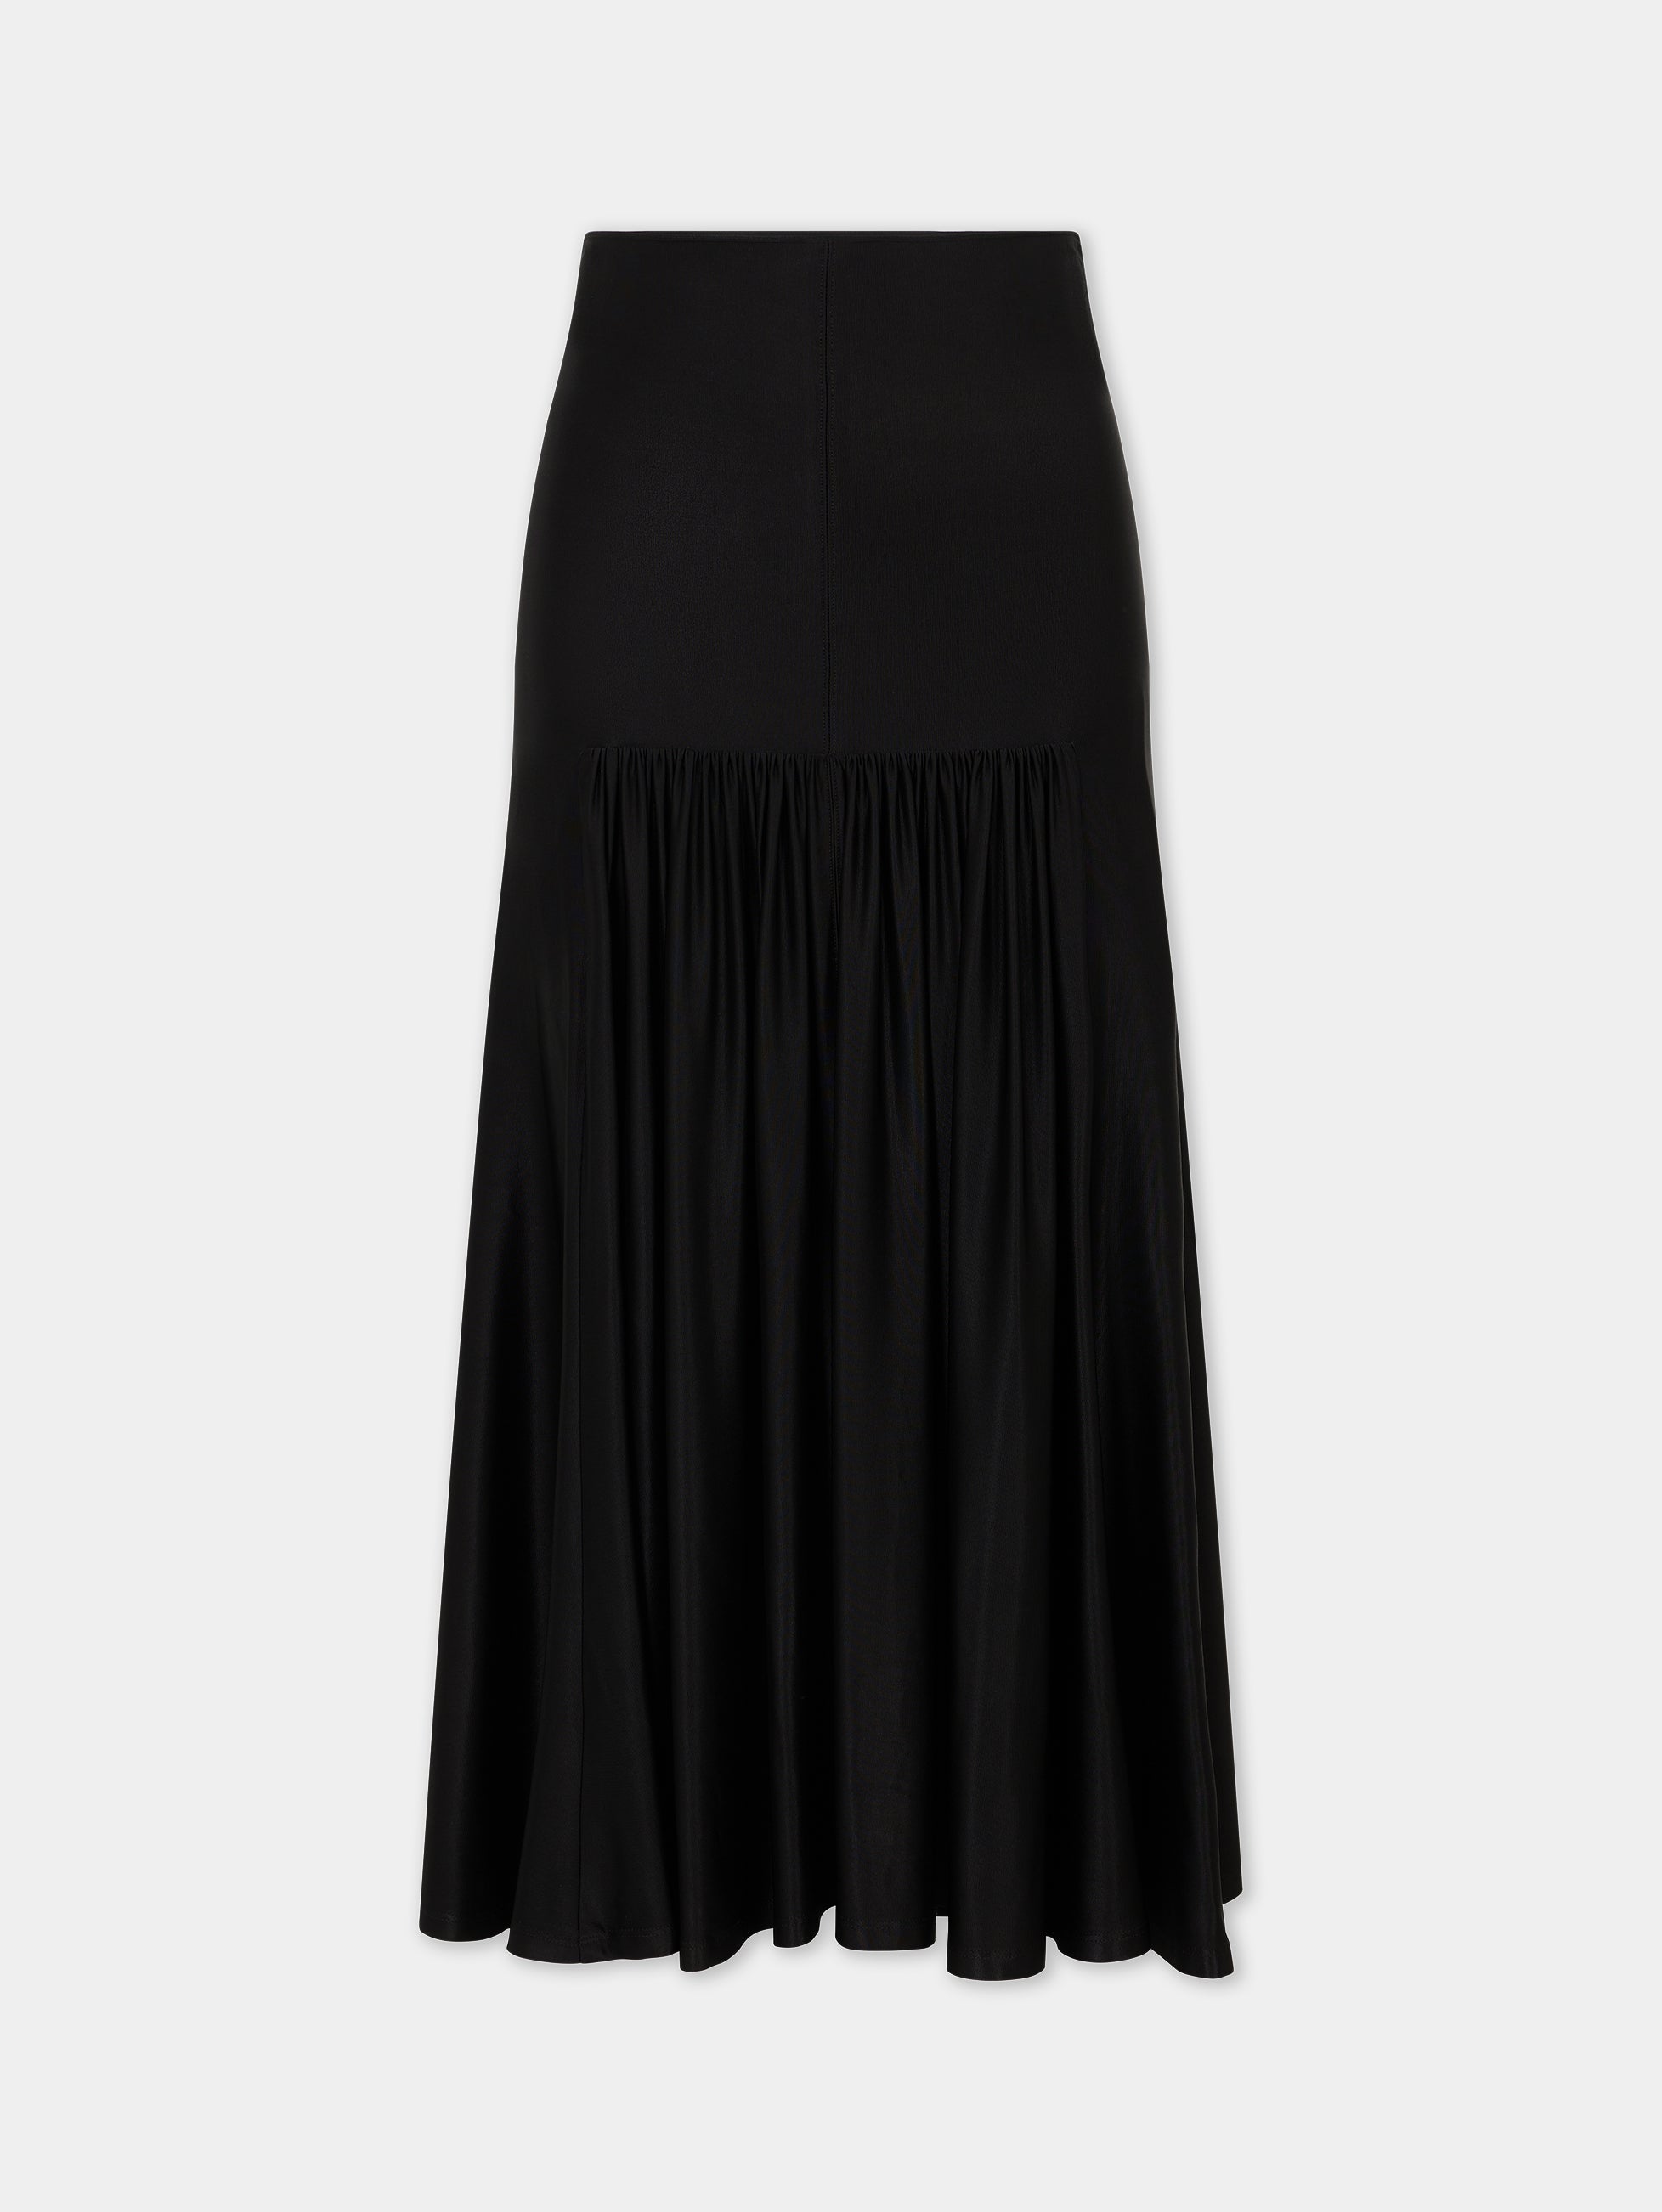 Long black skirt in jersey | Rabanne